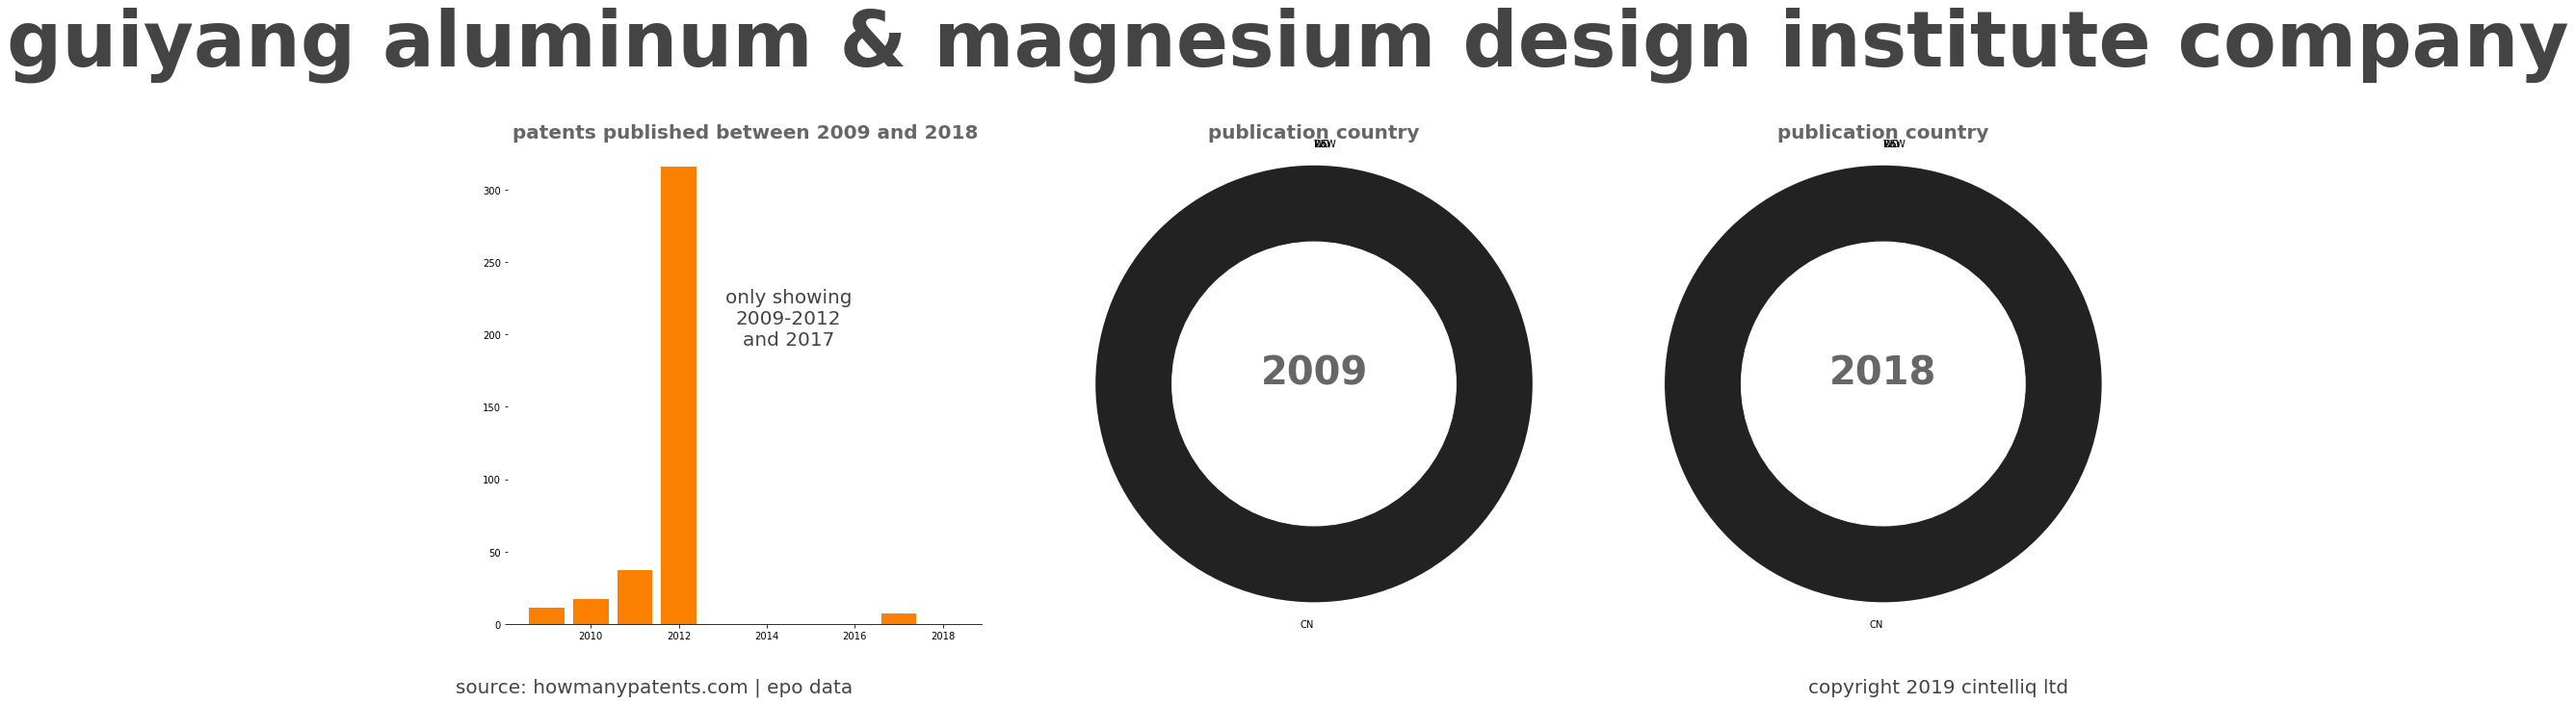 summary of patents for Guiyang Aluminum & Magnesium Design Institute Company